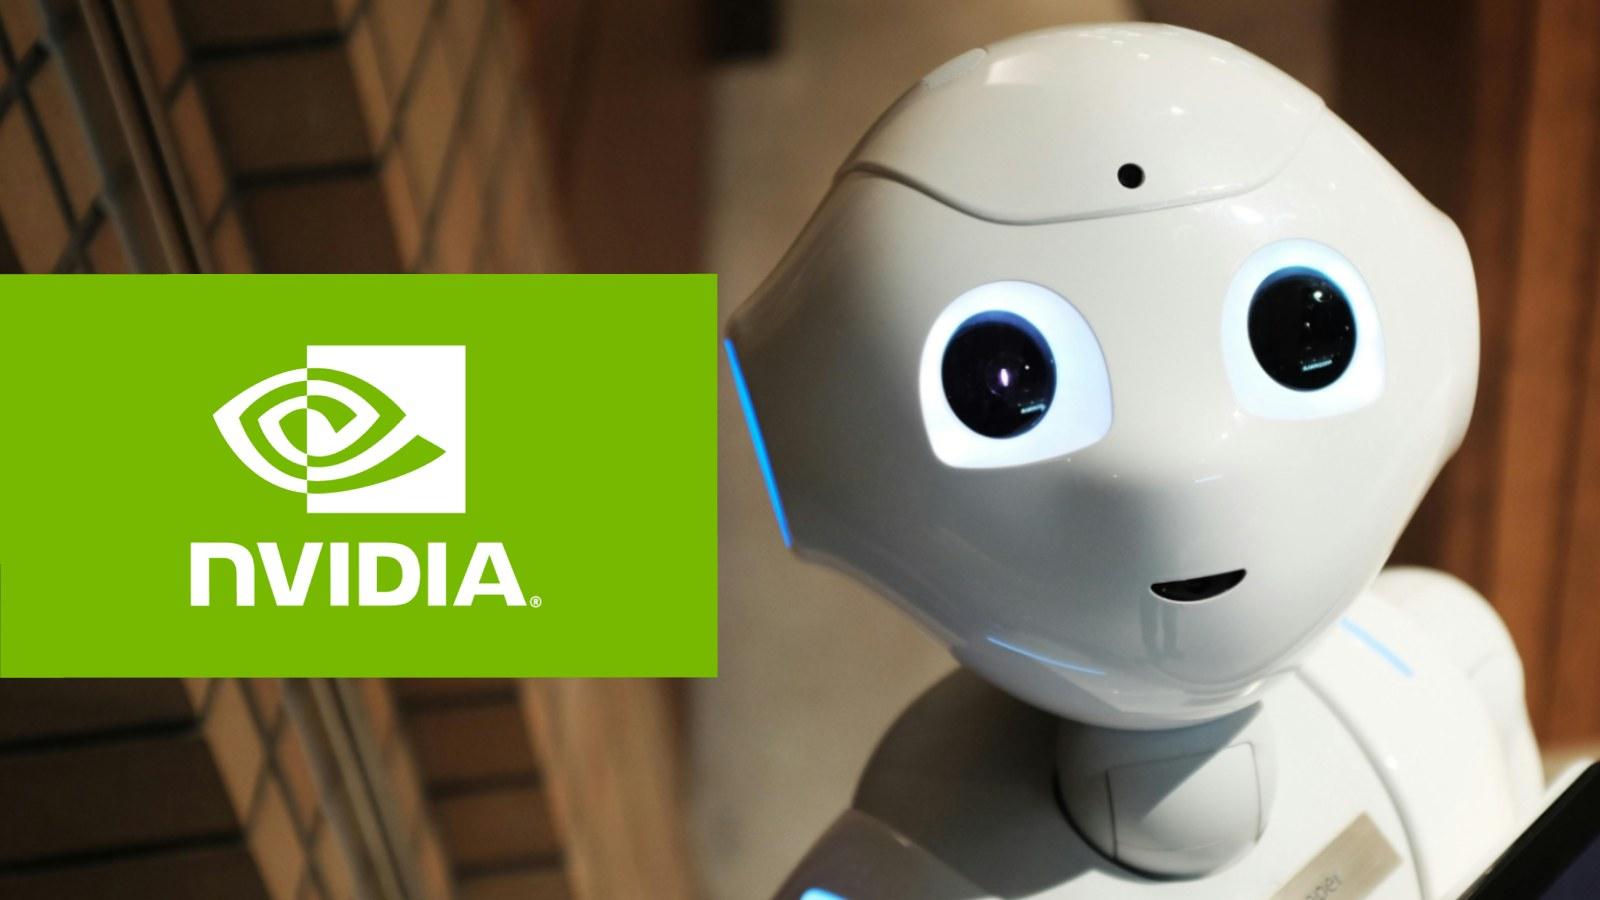 Robot next to Nvidia Logo